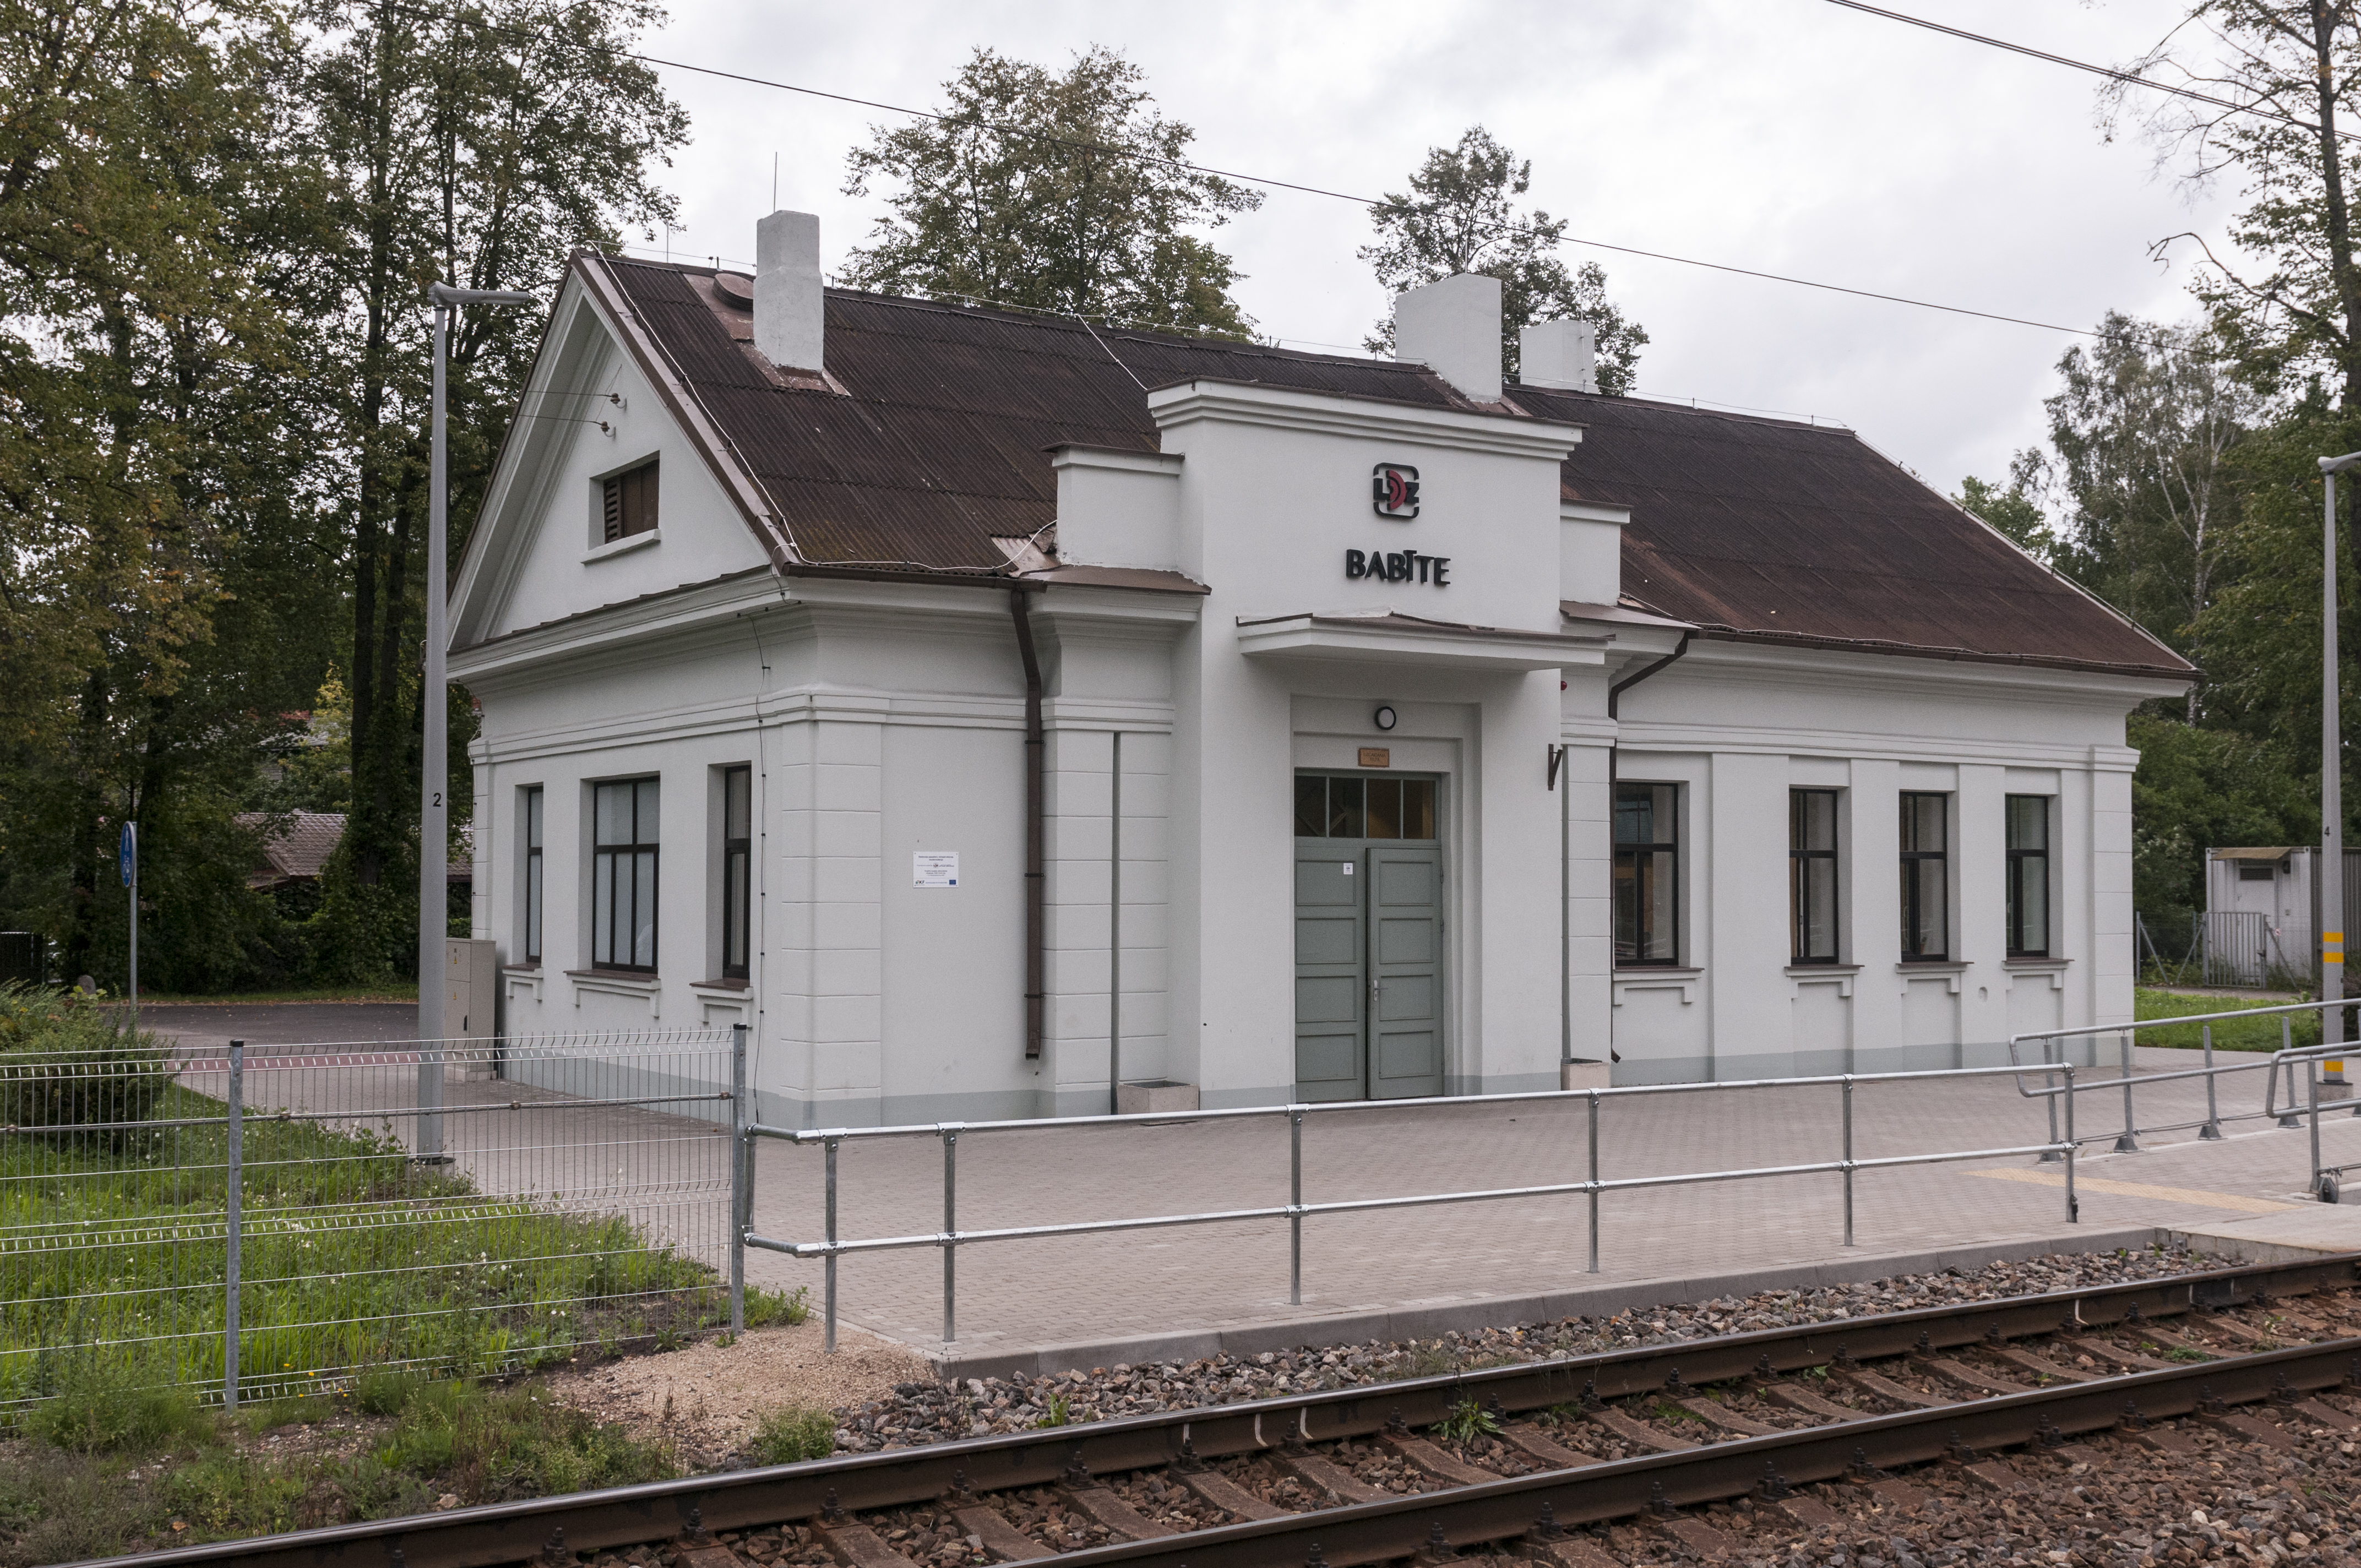 16-08-30-Babīte railway station-RR2 3637